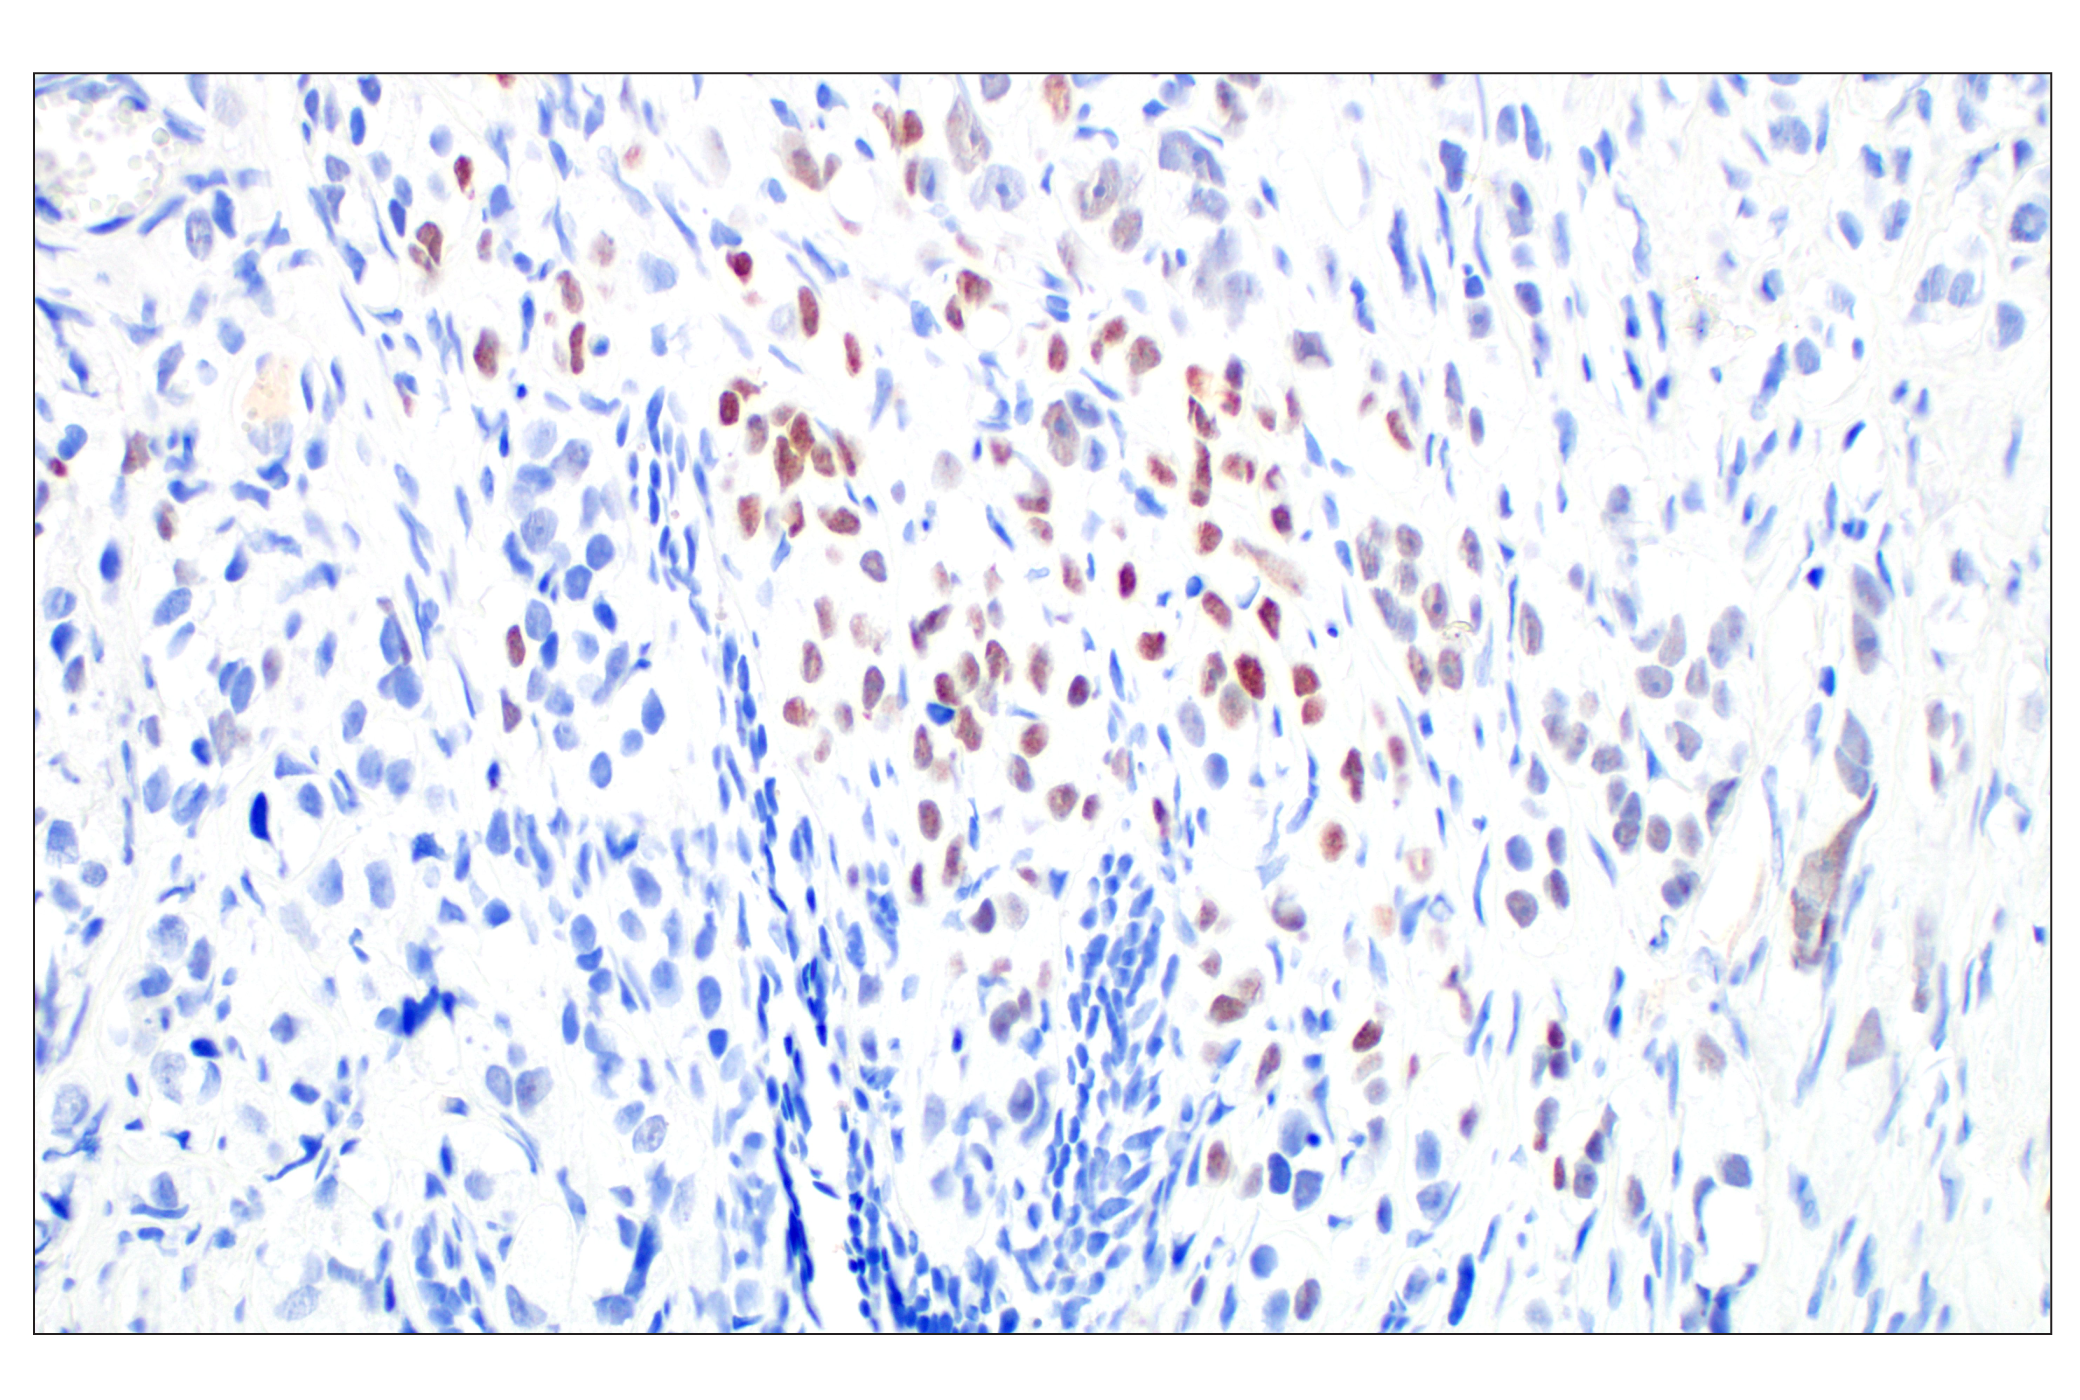  Image 6: PhosphoPlus® Histone H2A.X (Ser139) Antibody Duet